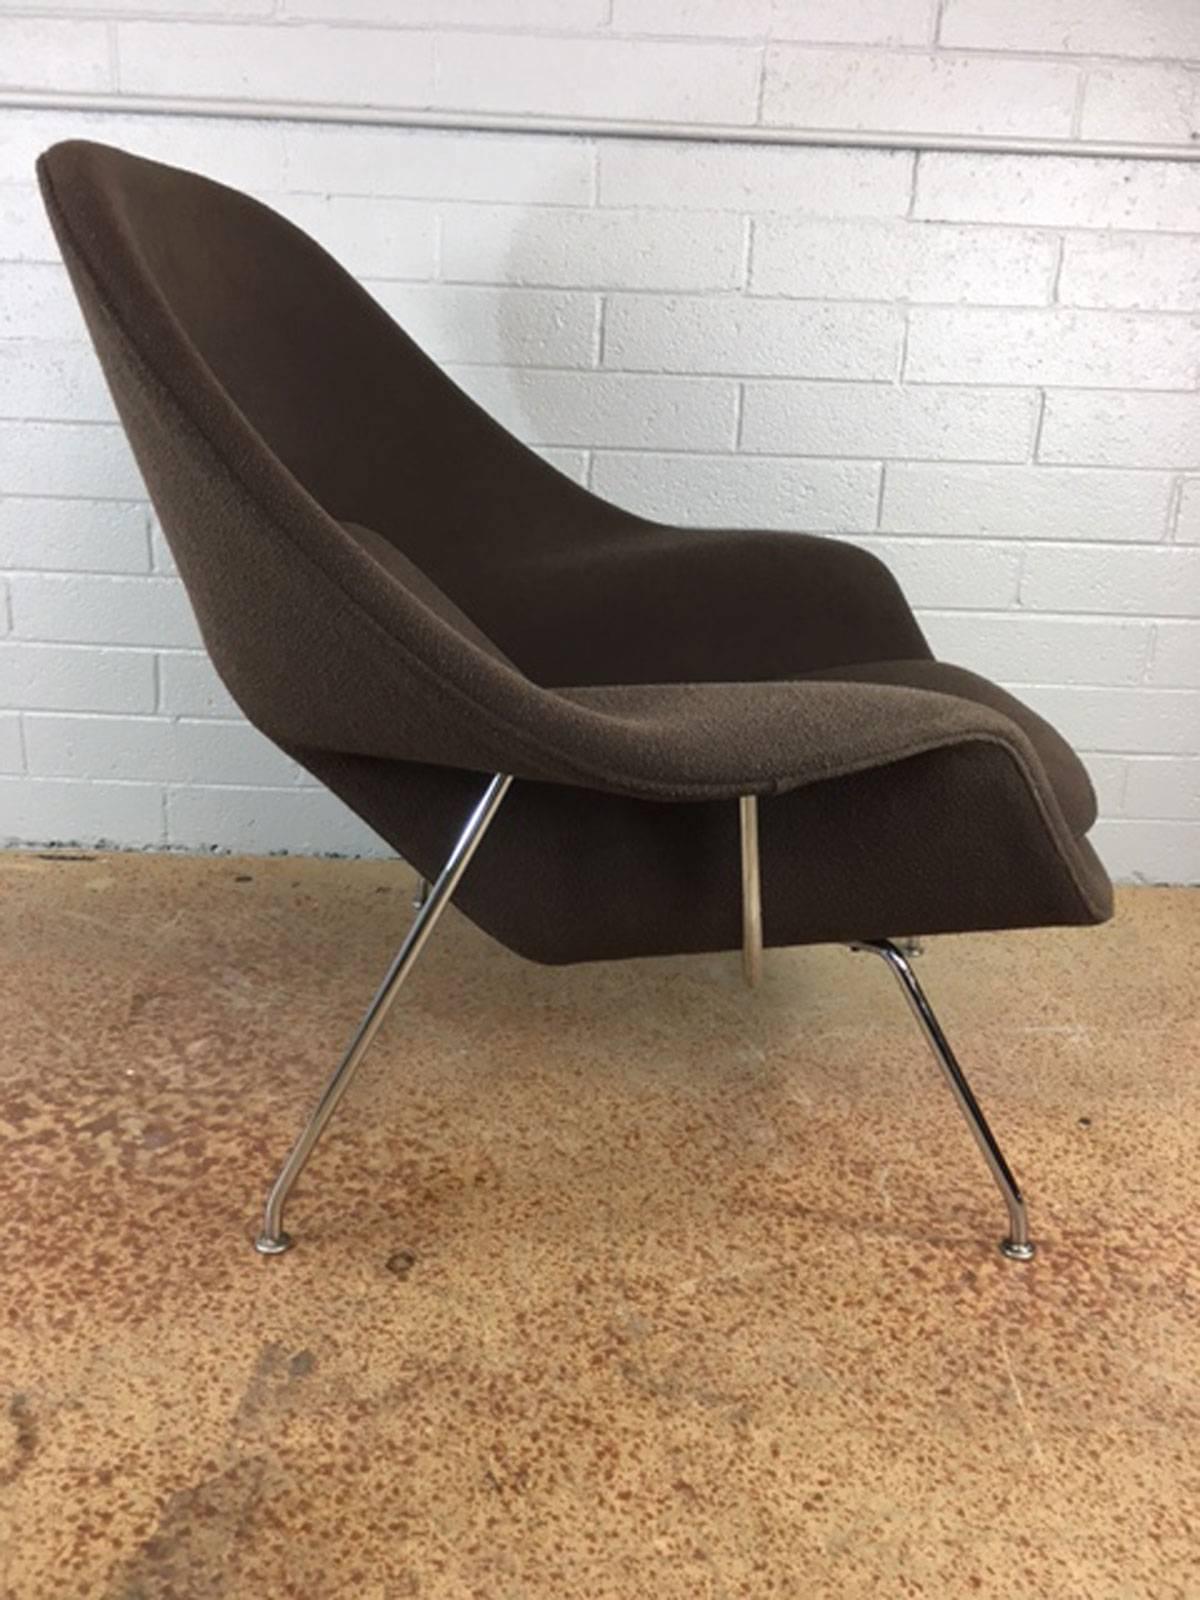 Mid-Century Modern Eero Saarinen Womb Chair by Knoll - 1 Available 